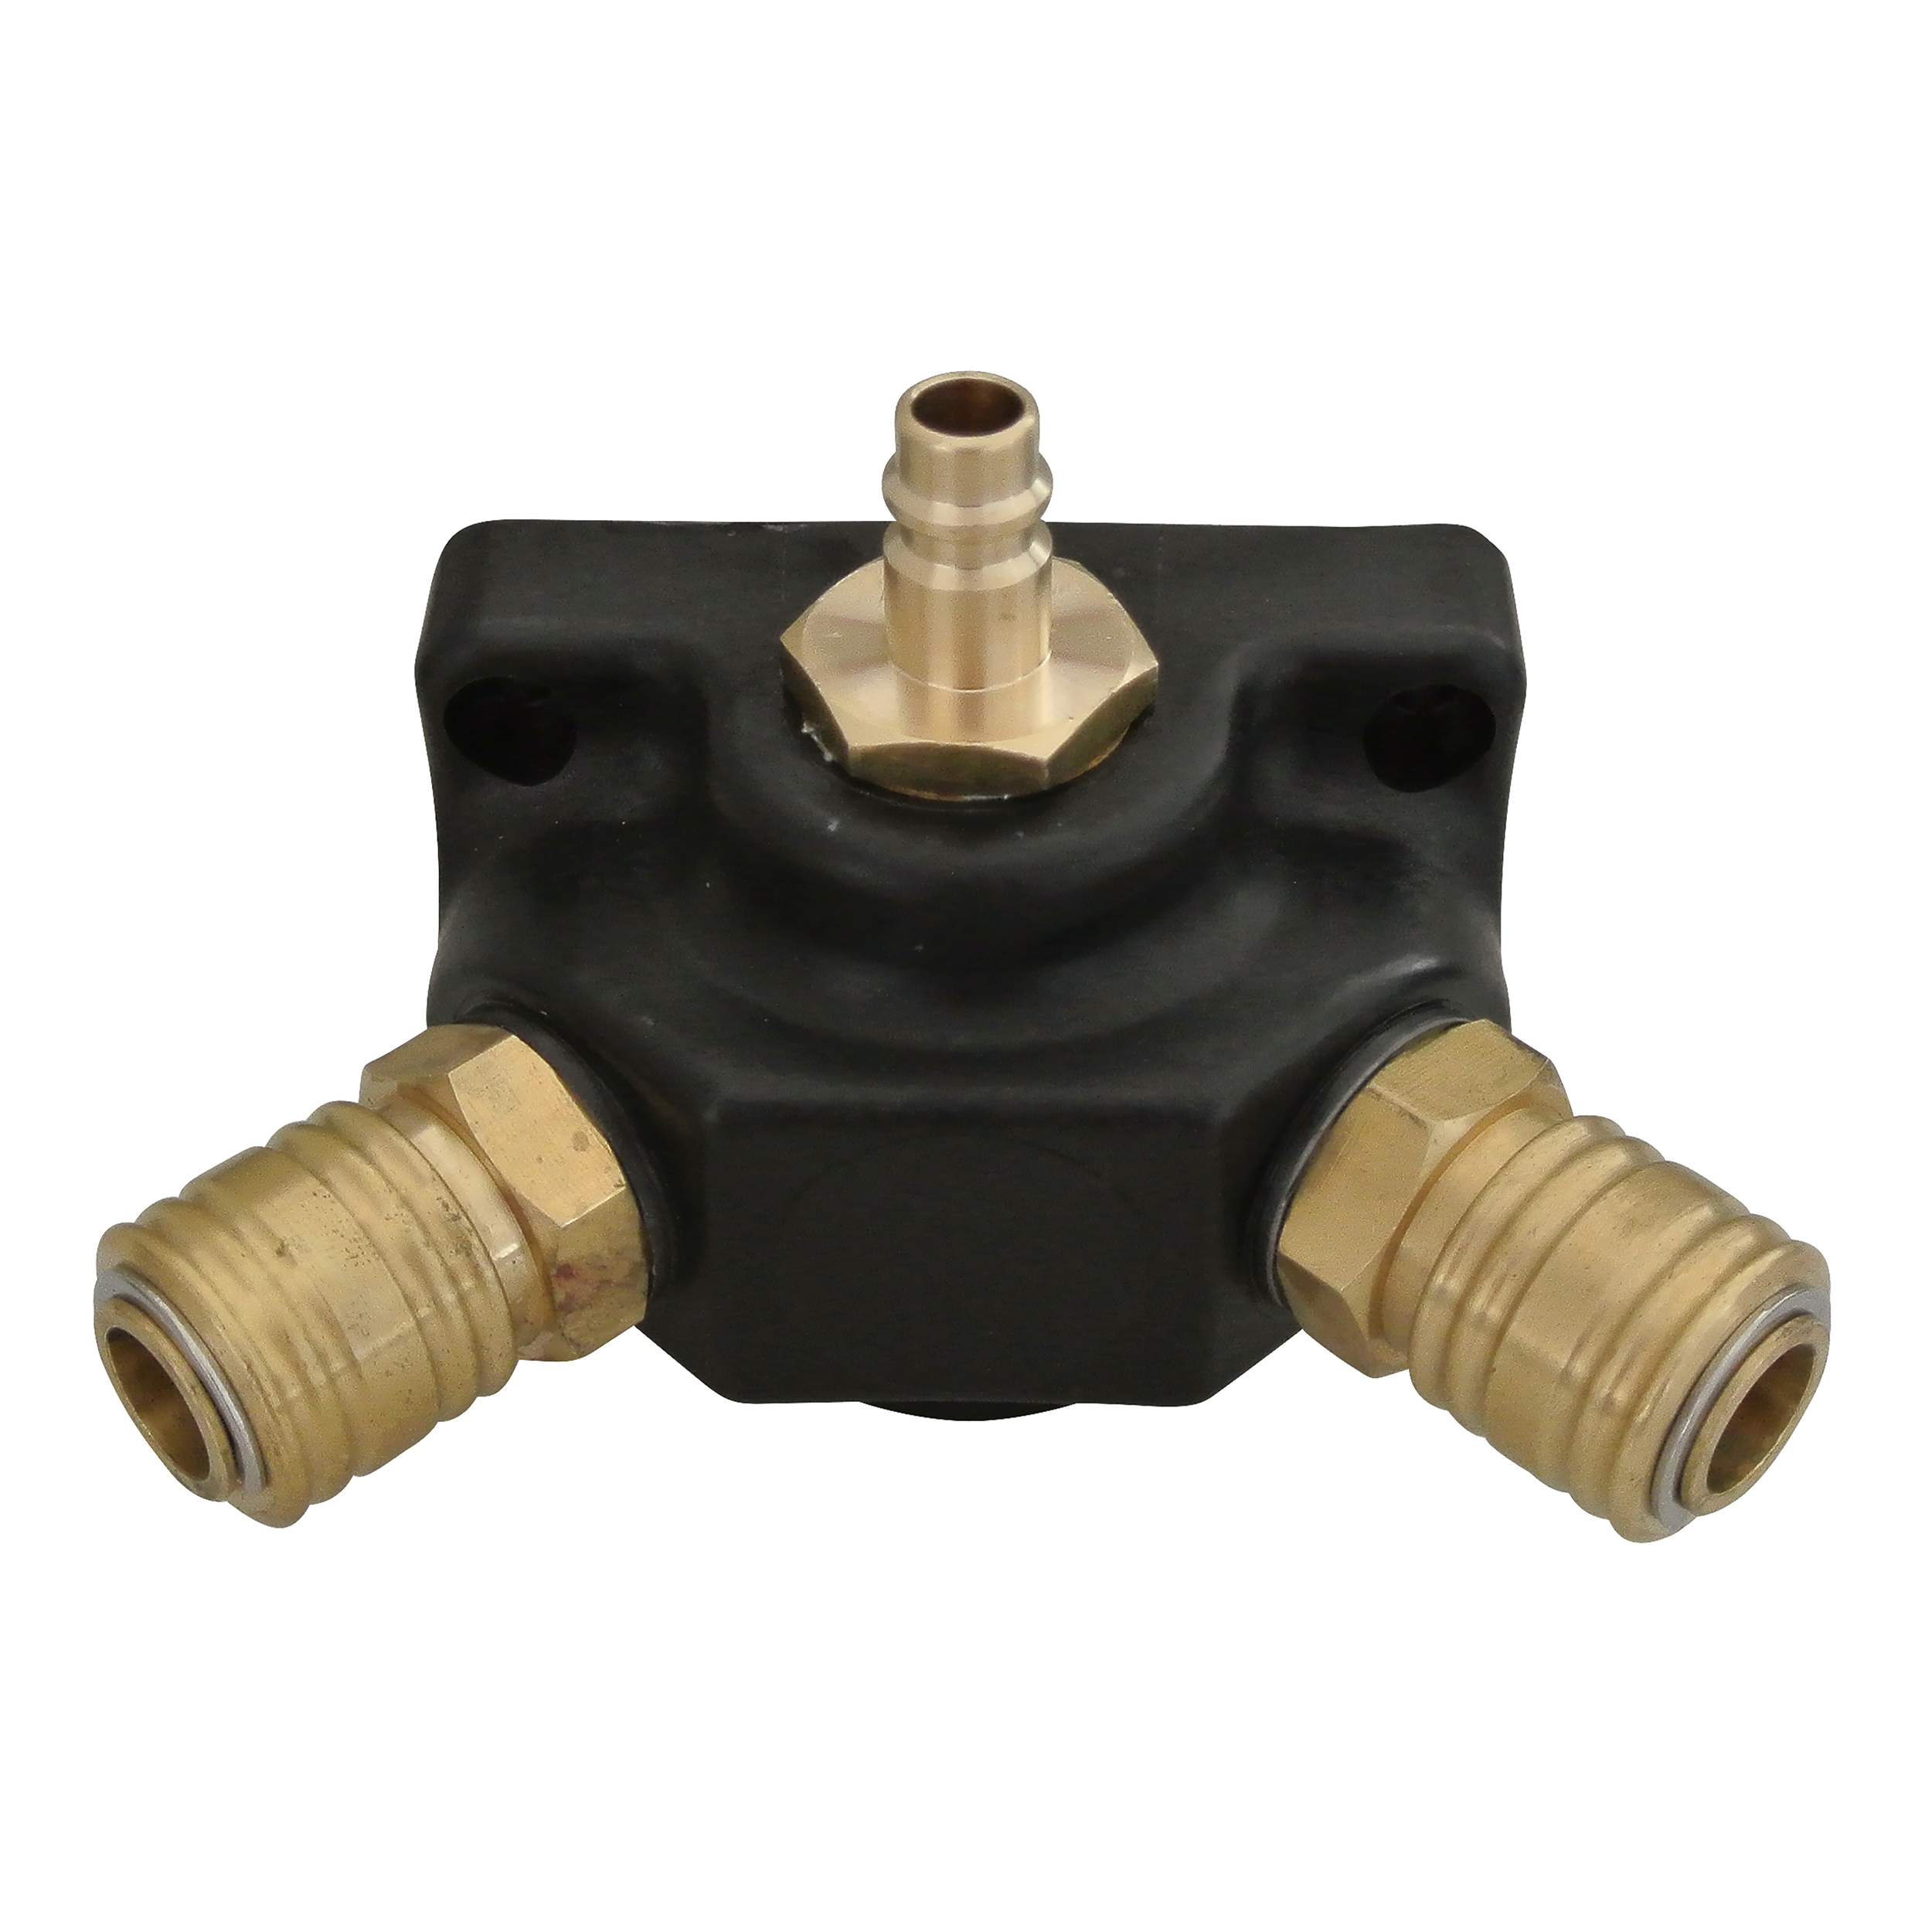 Distributor block, 2 MS-coupling, DN 7.2 coupling plug, L: 85 mm, H: 60 mm, mounting holes distance: vert.: 44 mm, horiz.: 70 mm